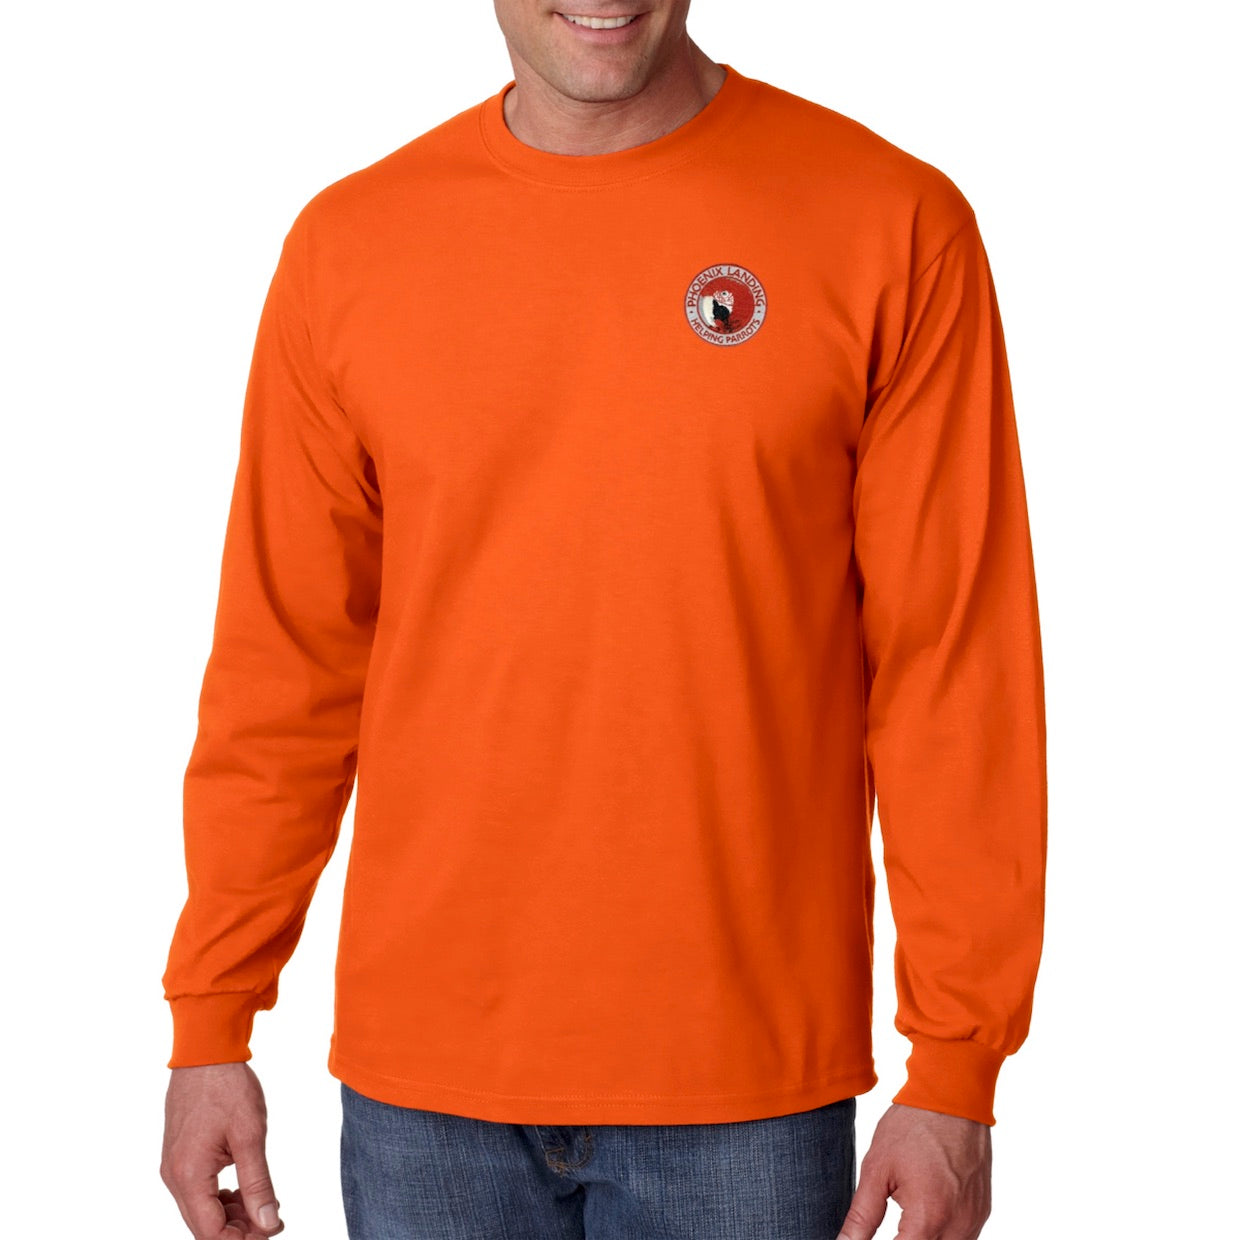 Long Sleeve Tee Shirt - Orange